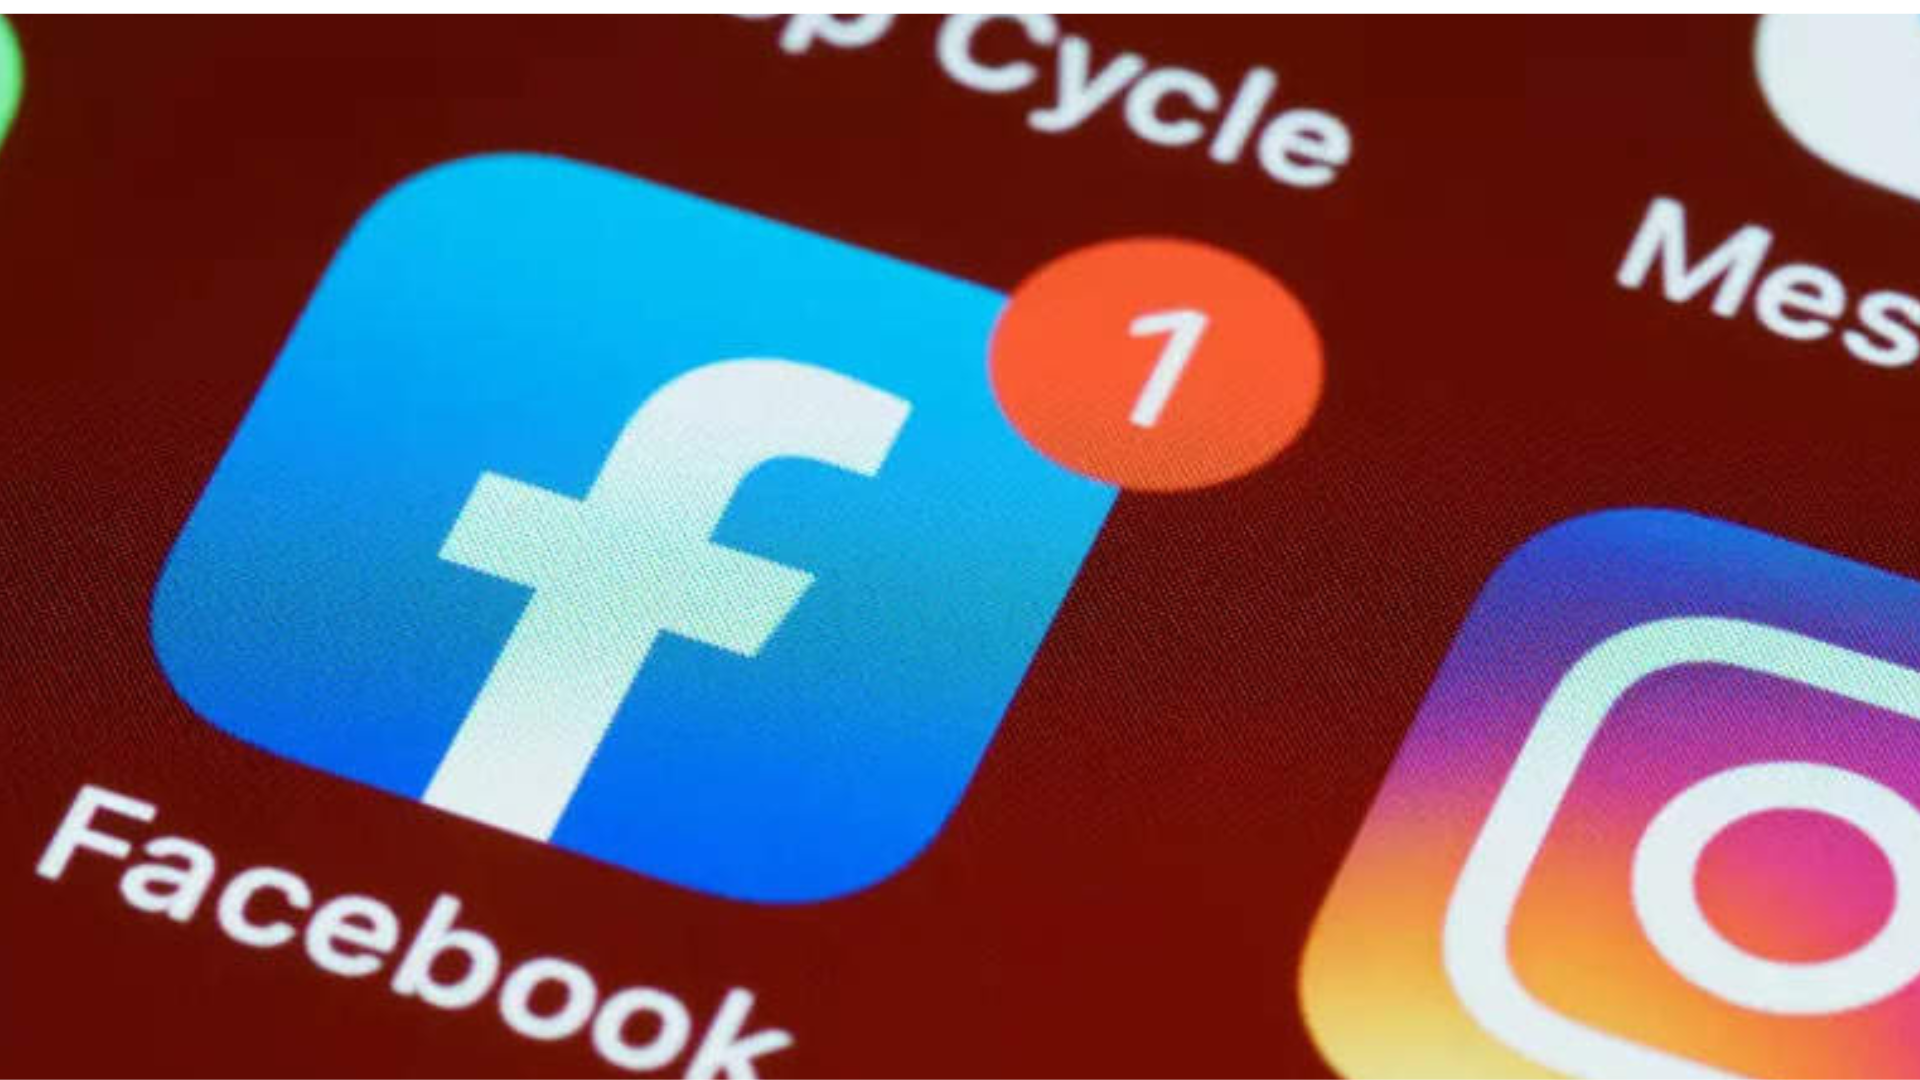 EU Investigates Meta Platforms for Child Safety on Facebook, Instagram